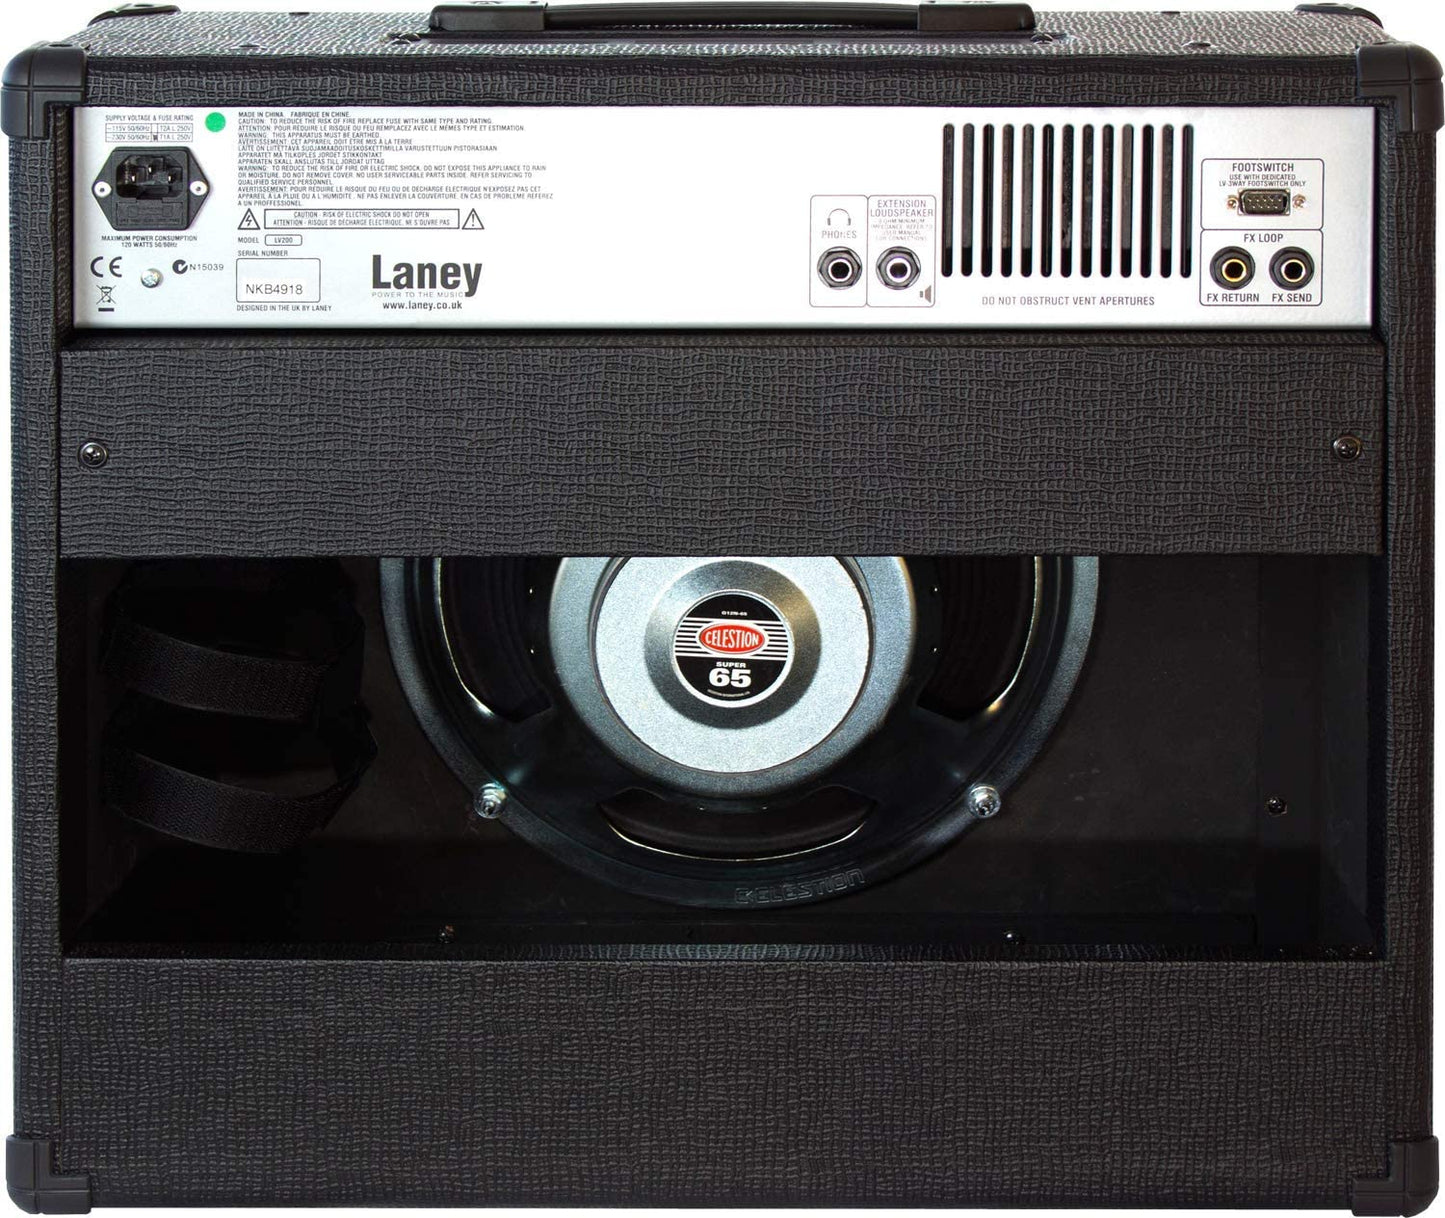 Laney LV200 65watts 1x12 Guitar Combo Amplifier